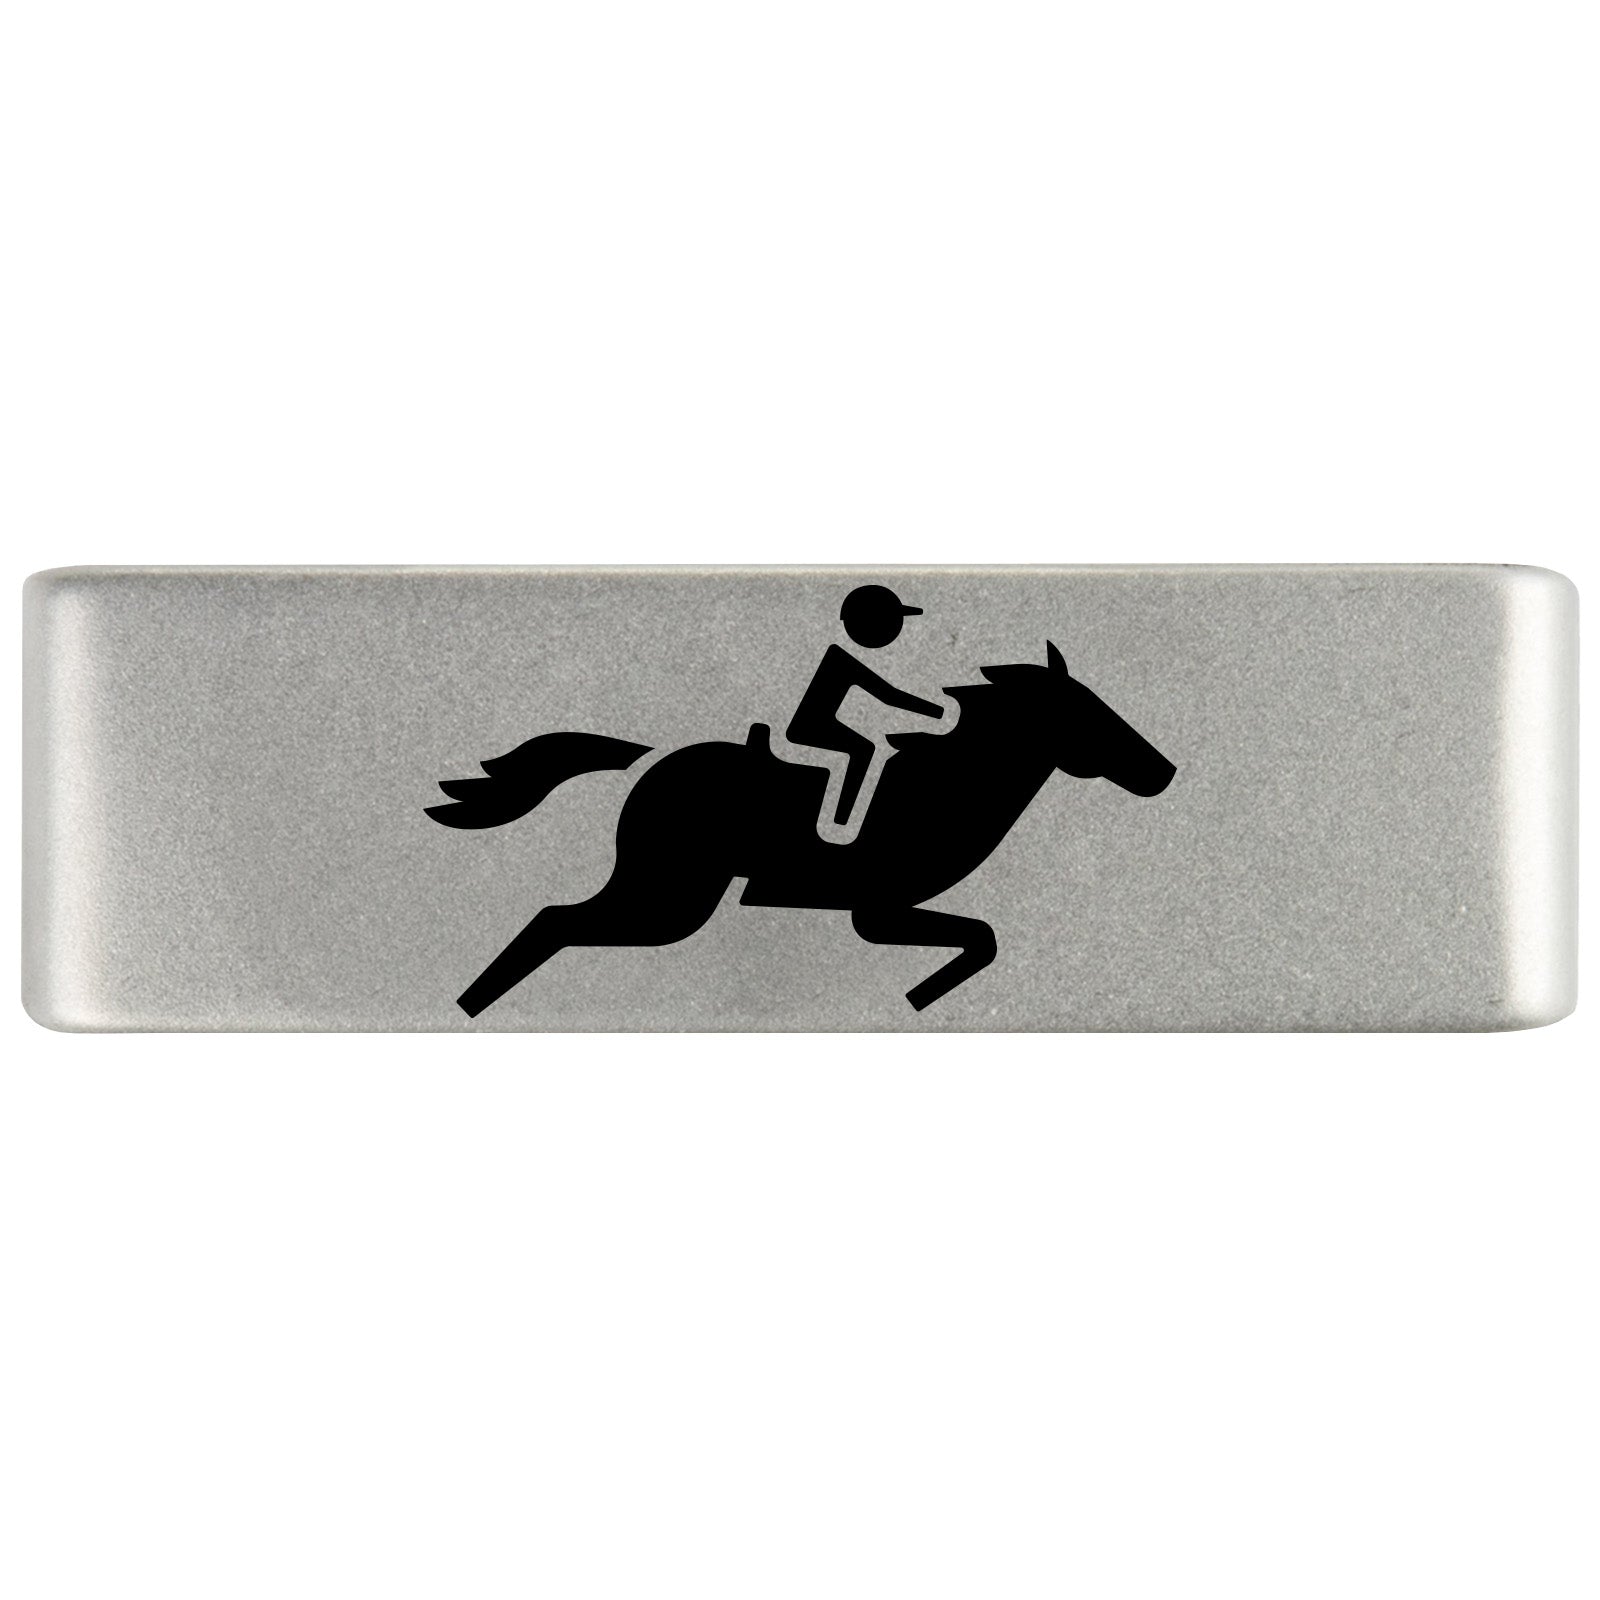 Horseback Badge Badge 19mm - ROAD iD